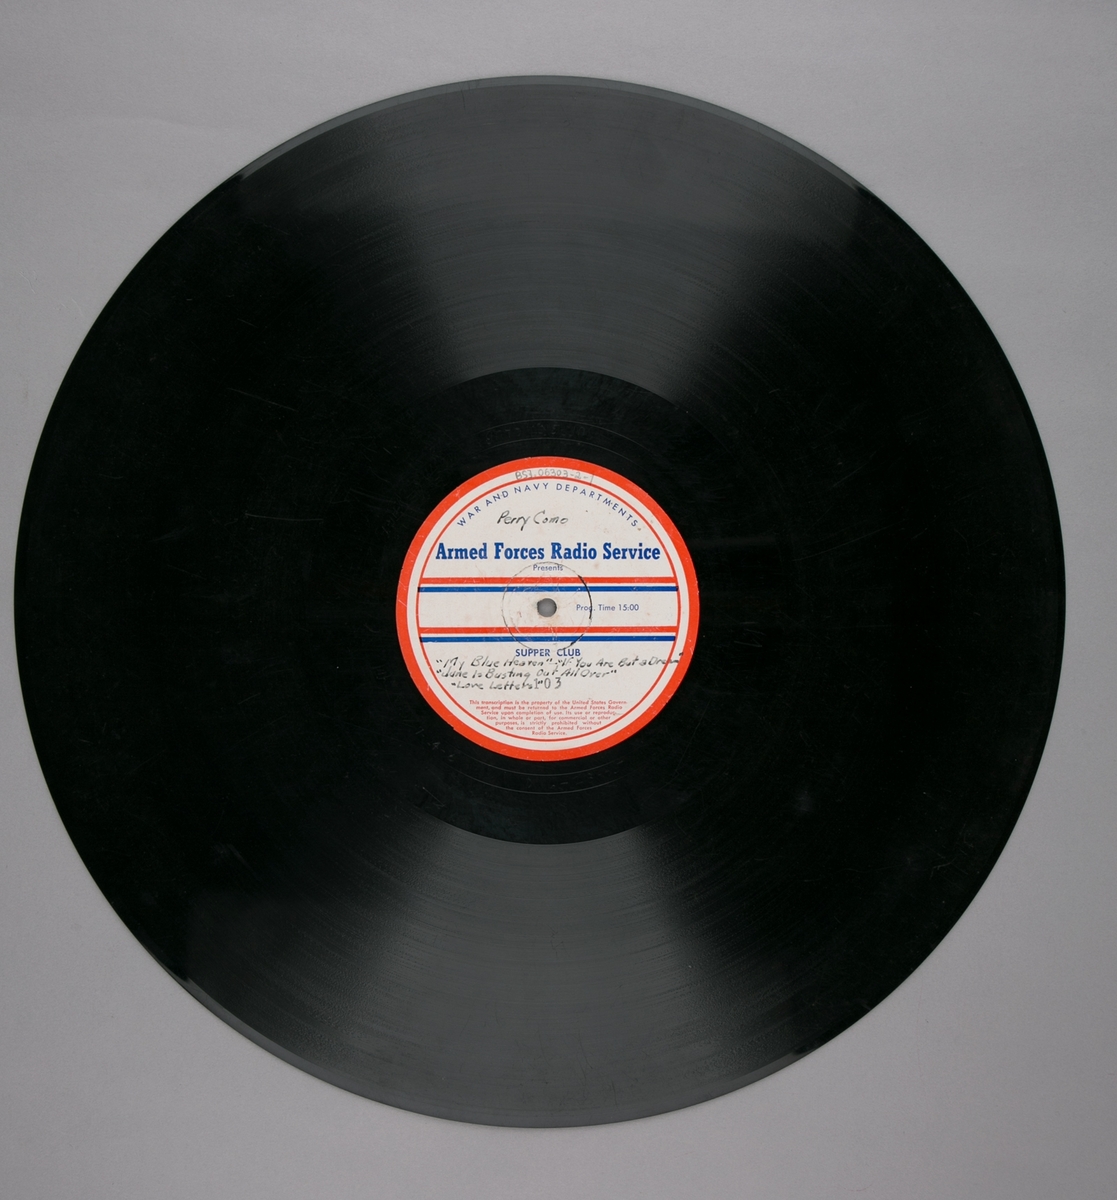 Grammofonplatesamling. LP-plate med tittel "Armed Forces Radio Service" utgitt av War and Navy Departements. Plate i svart vinyl spilles på platespiller med 33 1/3 omdreininger i minuttet (33-plate). I plateomslag.